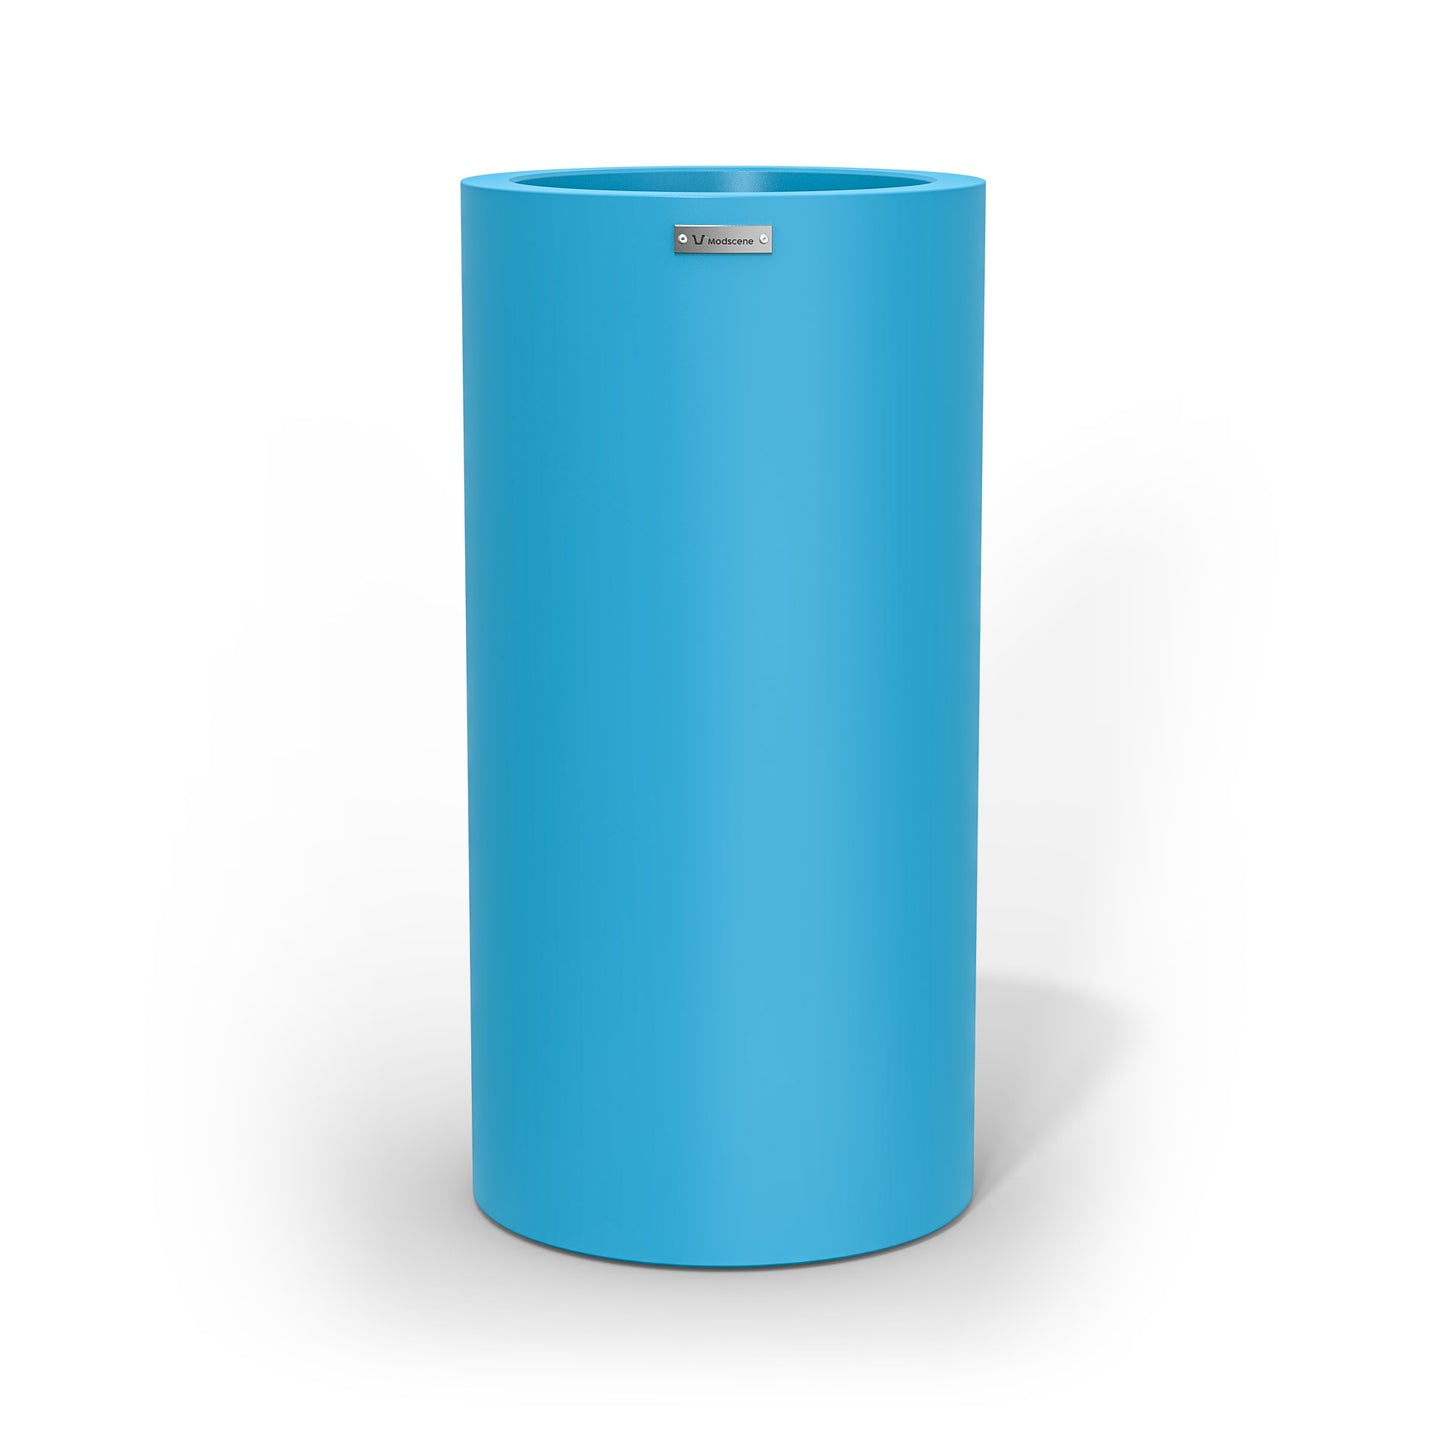 A large cigar cylinder pot planter in a light blue colour.